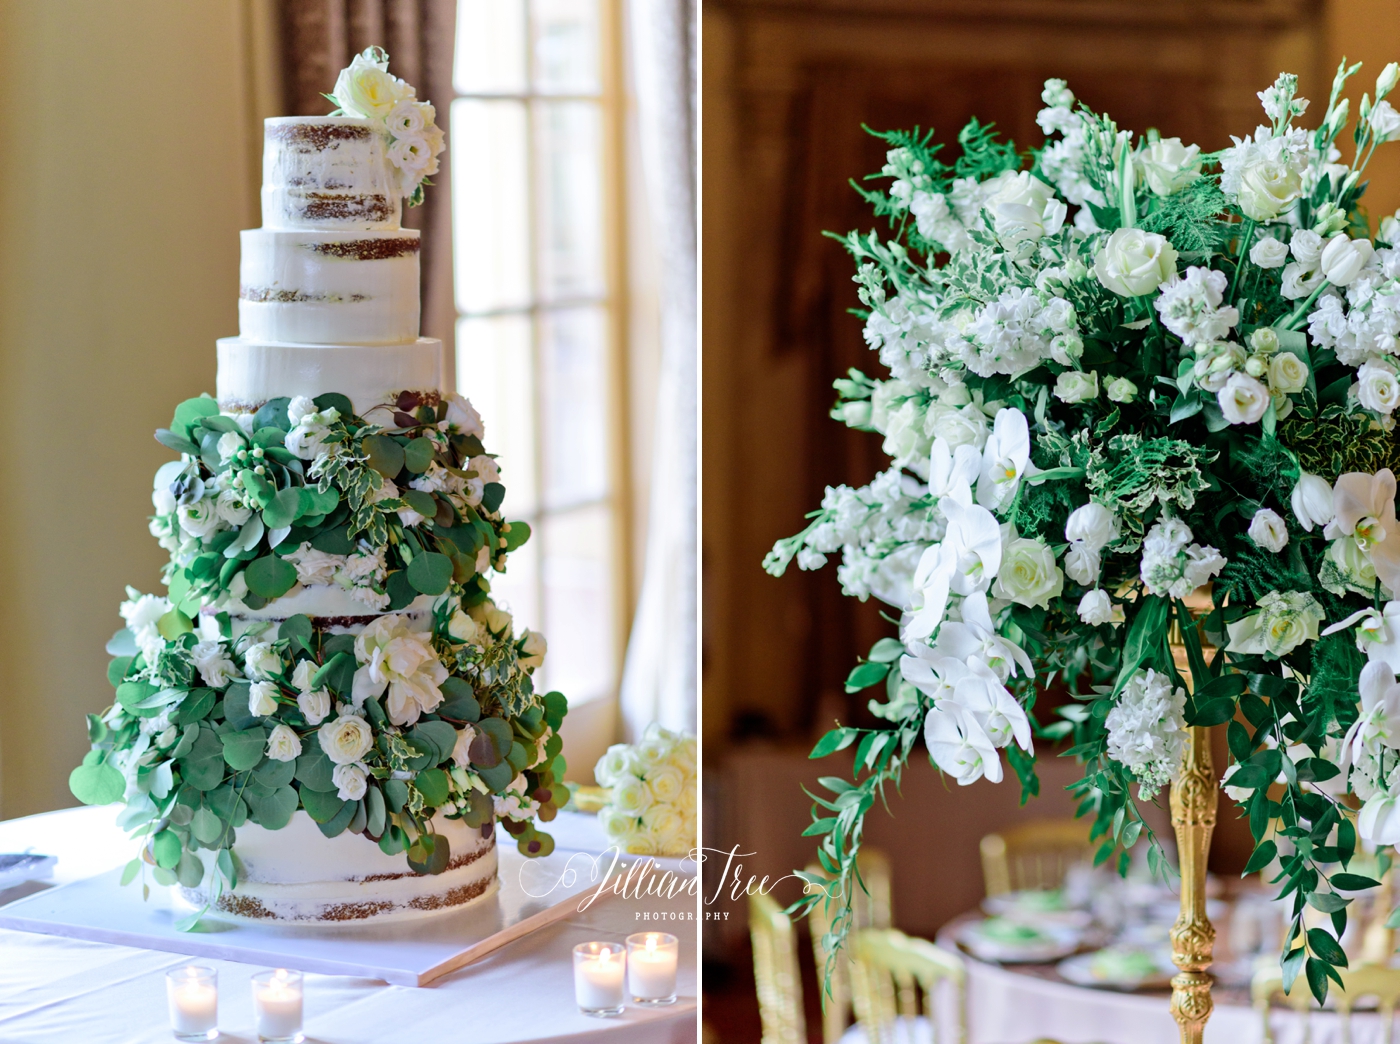 Earth and Sugar wedding cake